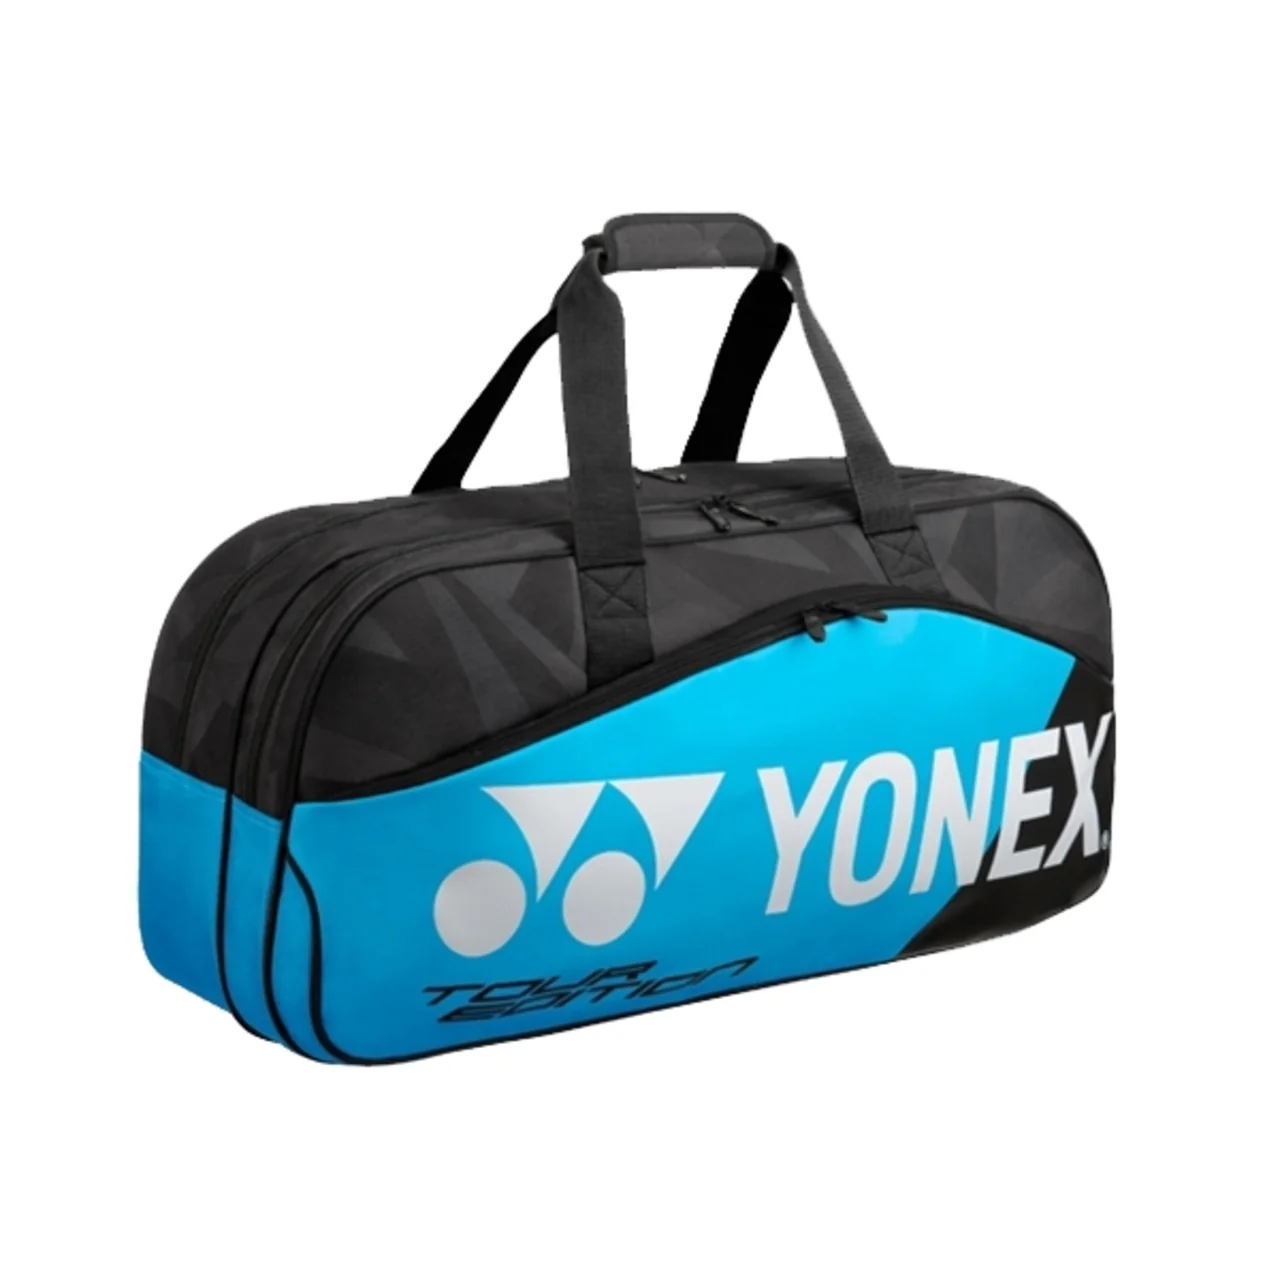 Yonex Wex Pro Tournament Bag Infinity Blue 2018